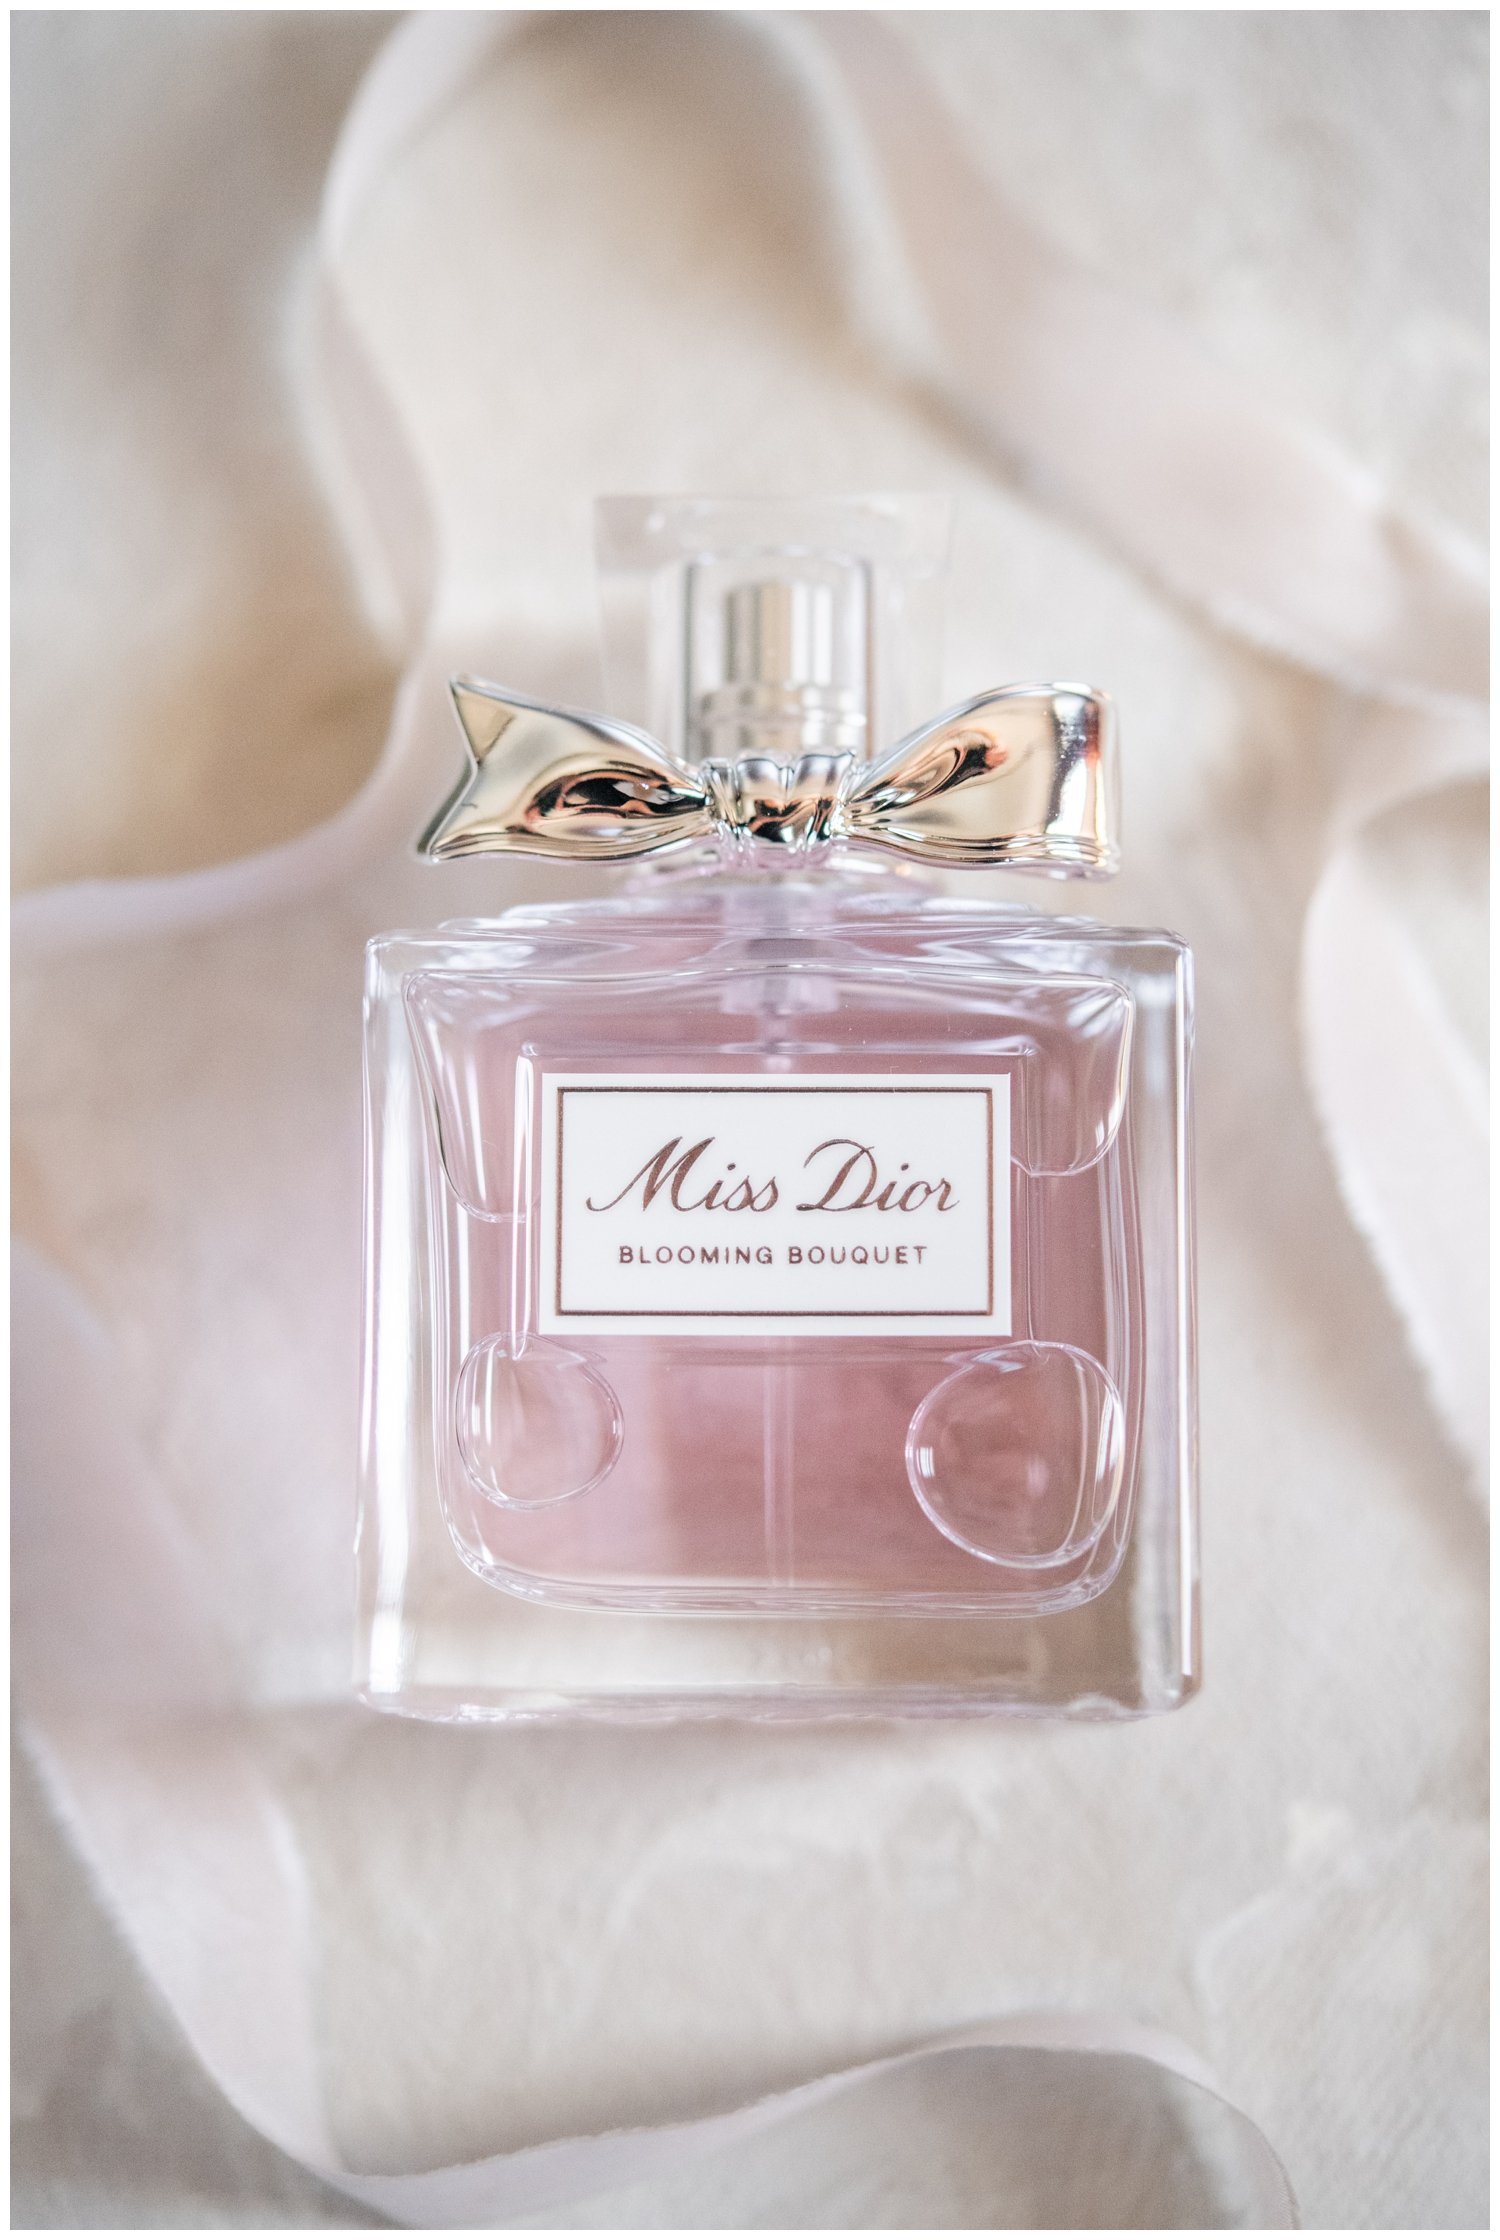 Christian Dior perfume bottle